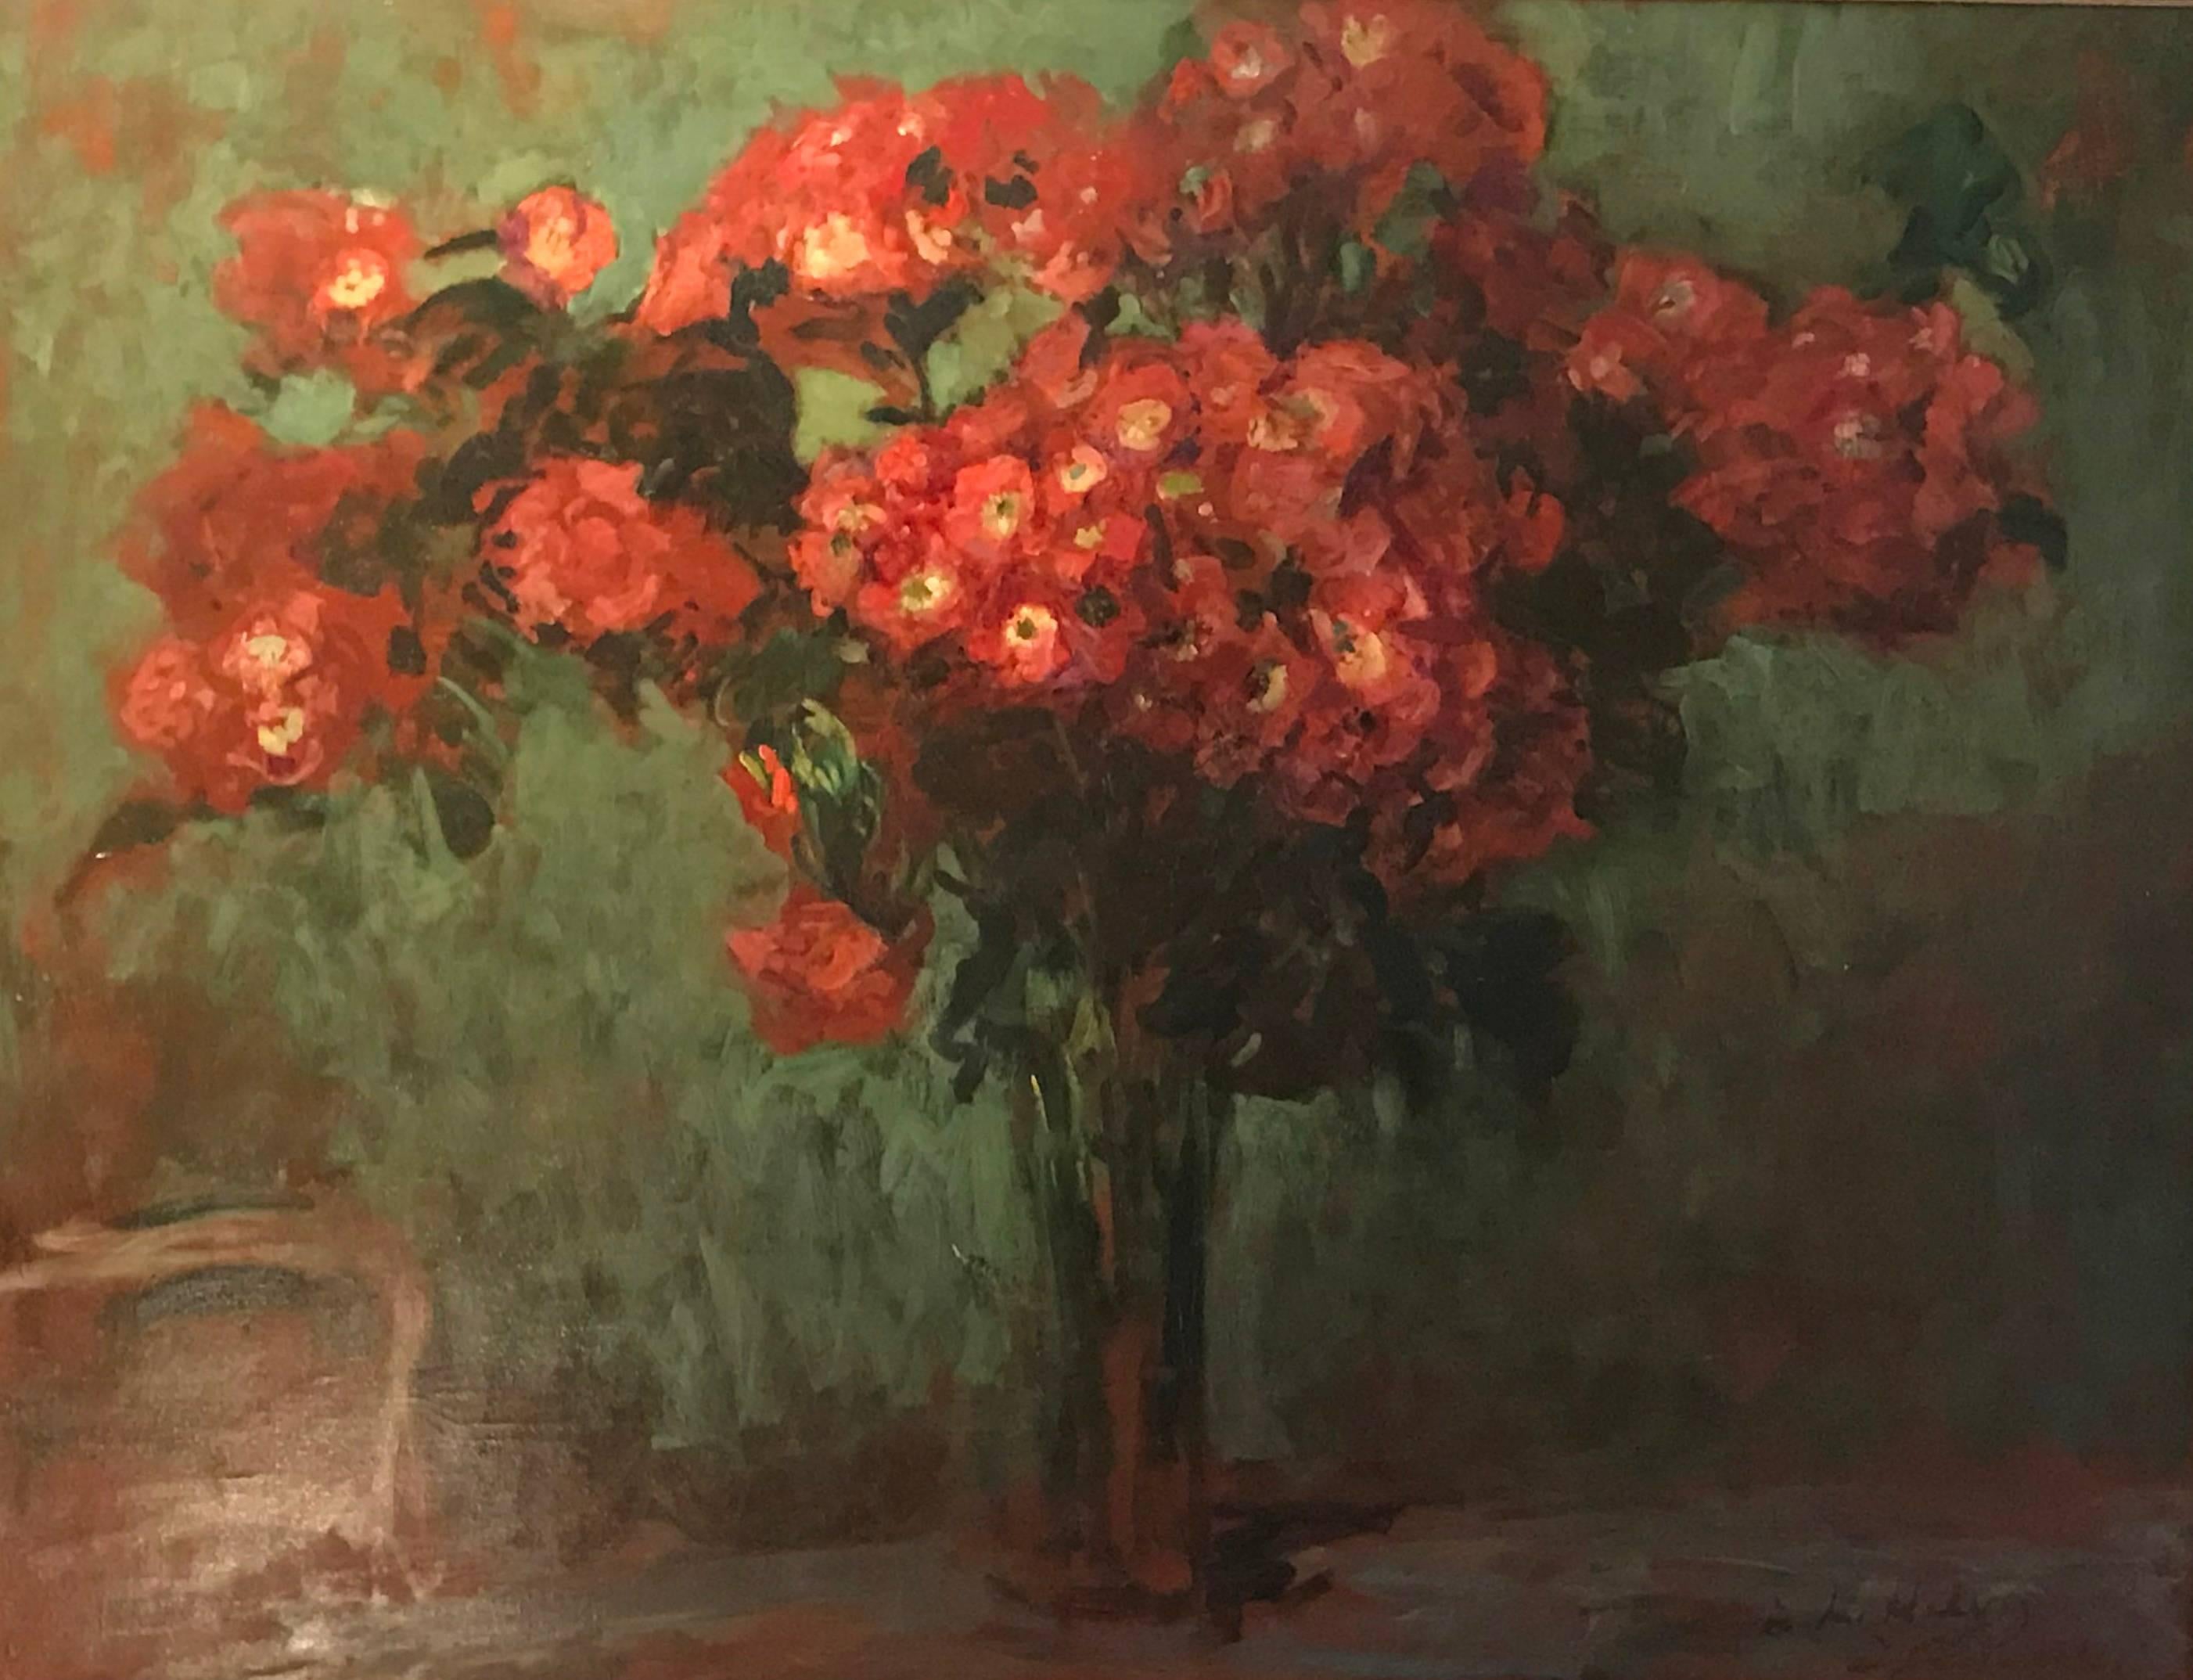 Großer roter Blumenstrauß – Painting von Jacques Emile Blanche